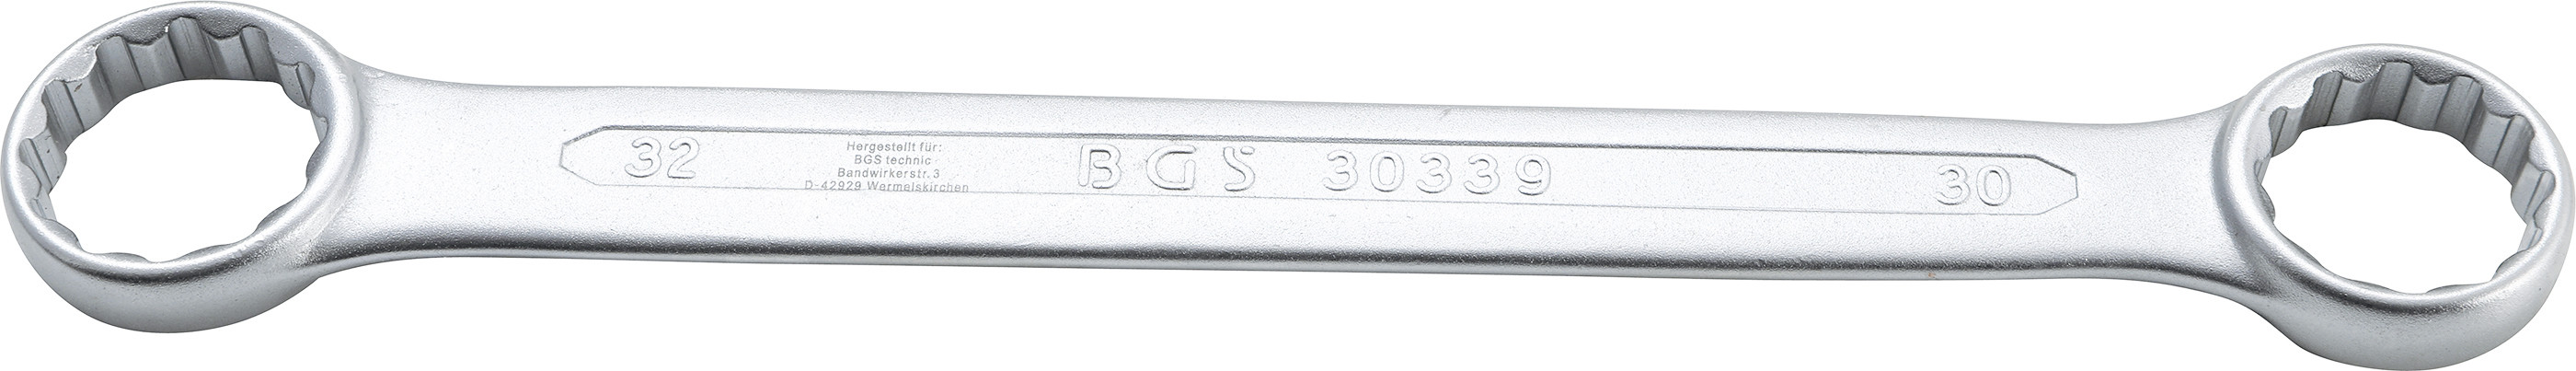 BGS 30339 Cheie inelară dublă 30 x 32 mm extra plată